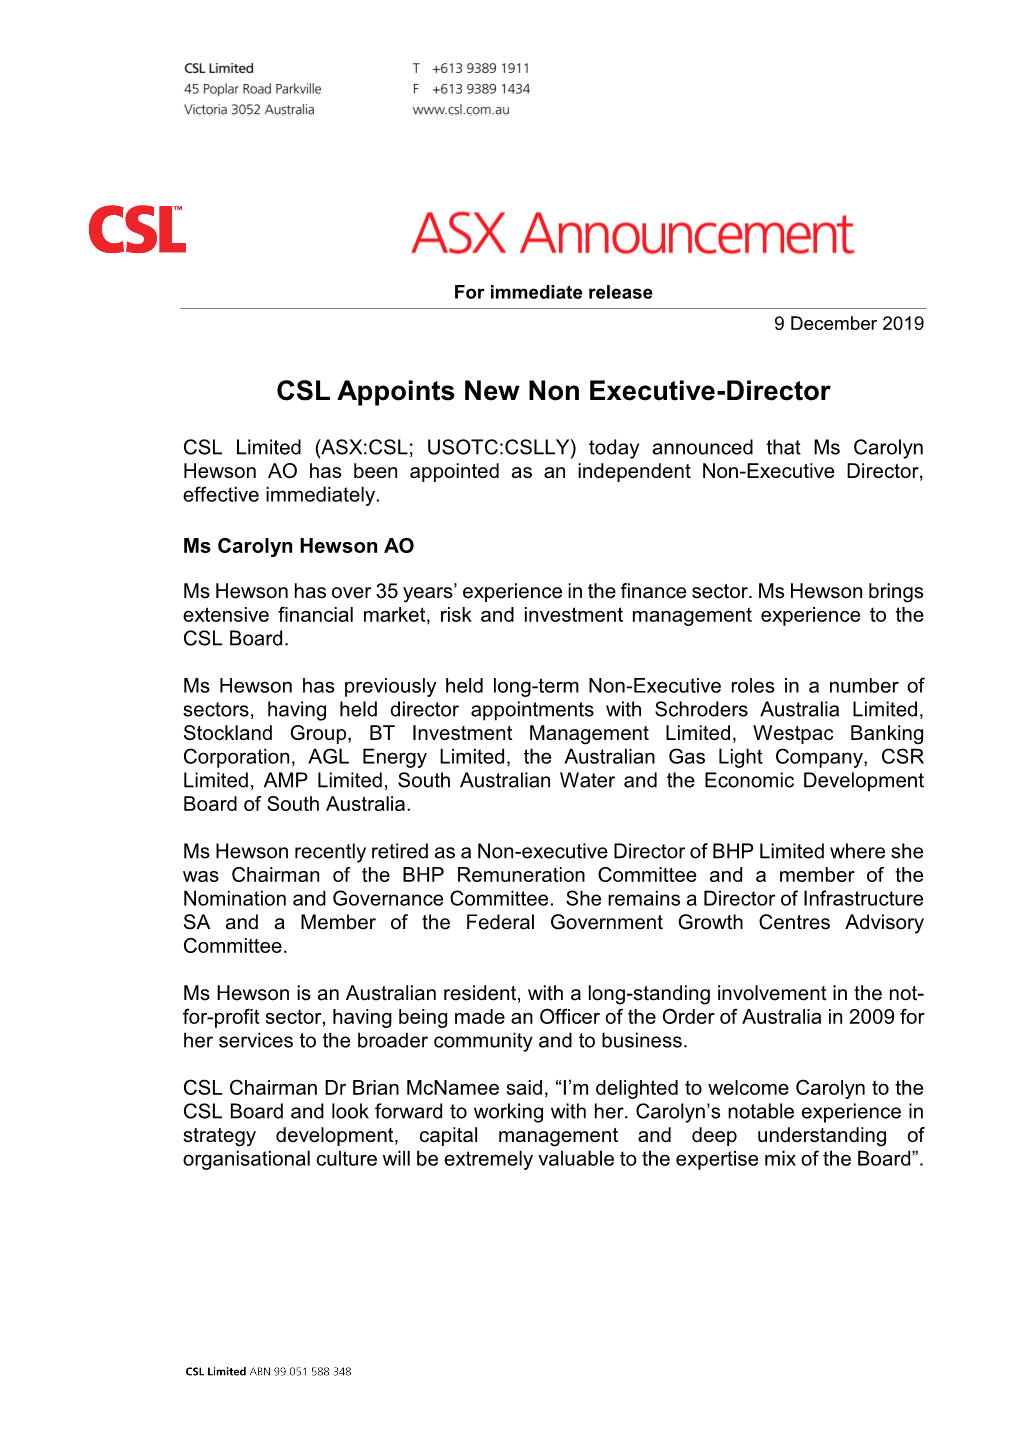 CSL Appoints New Non Executive-Director